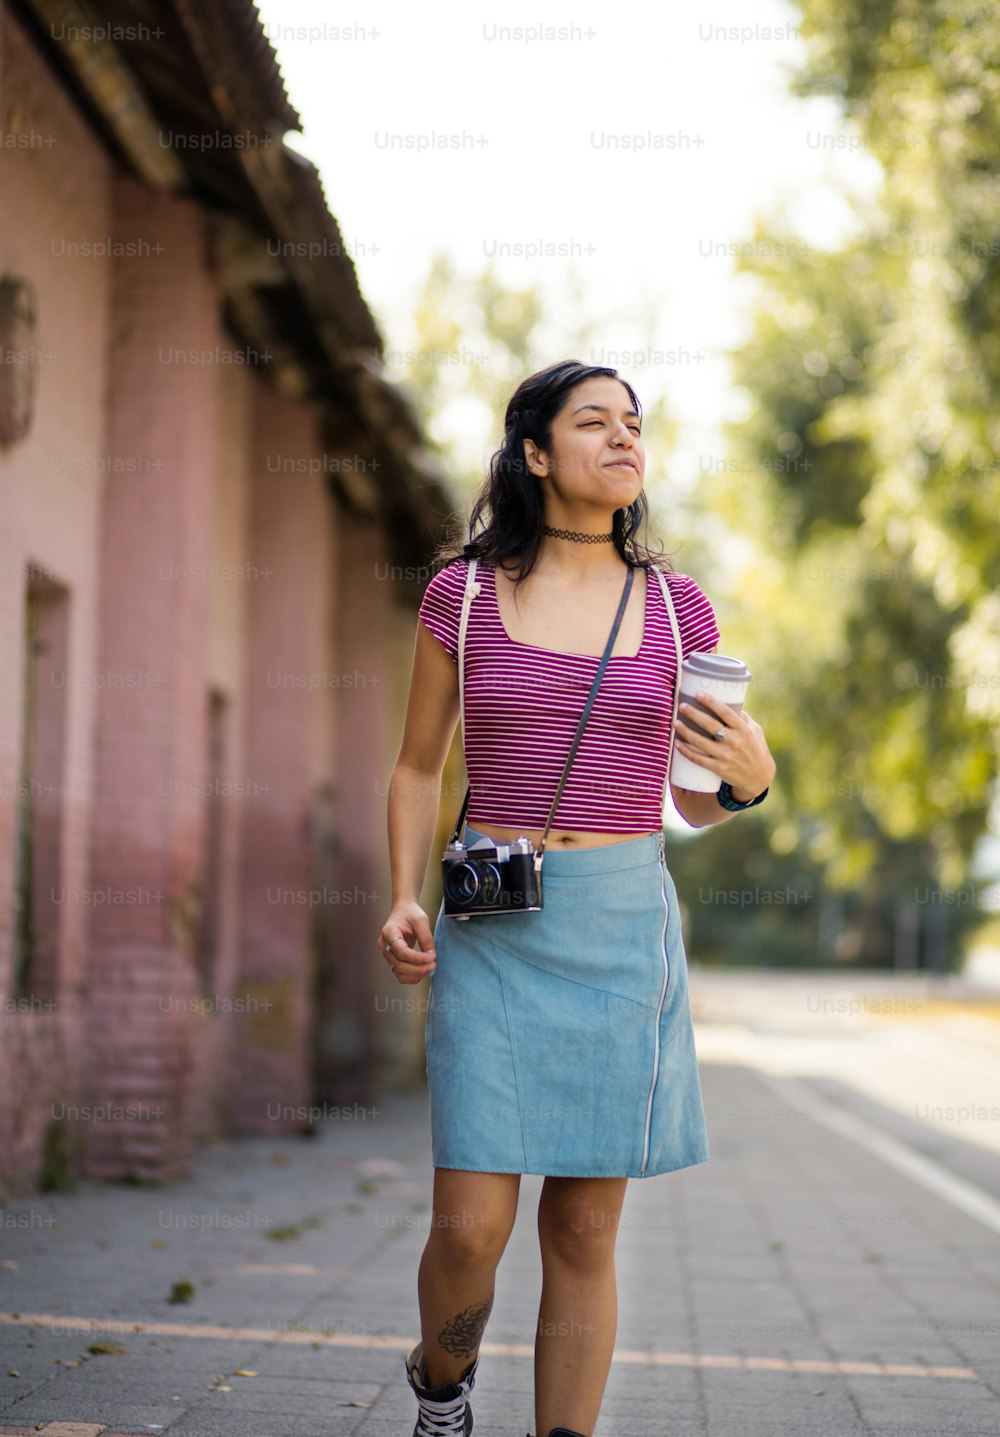 Girl walking trough street with camera.